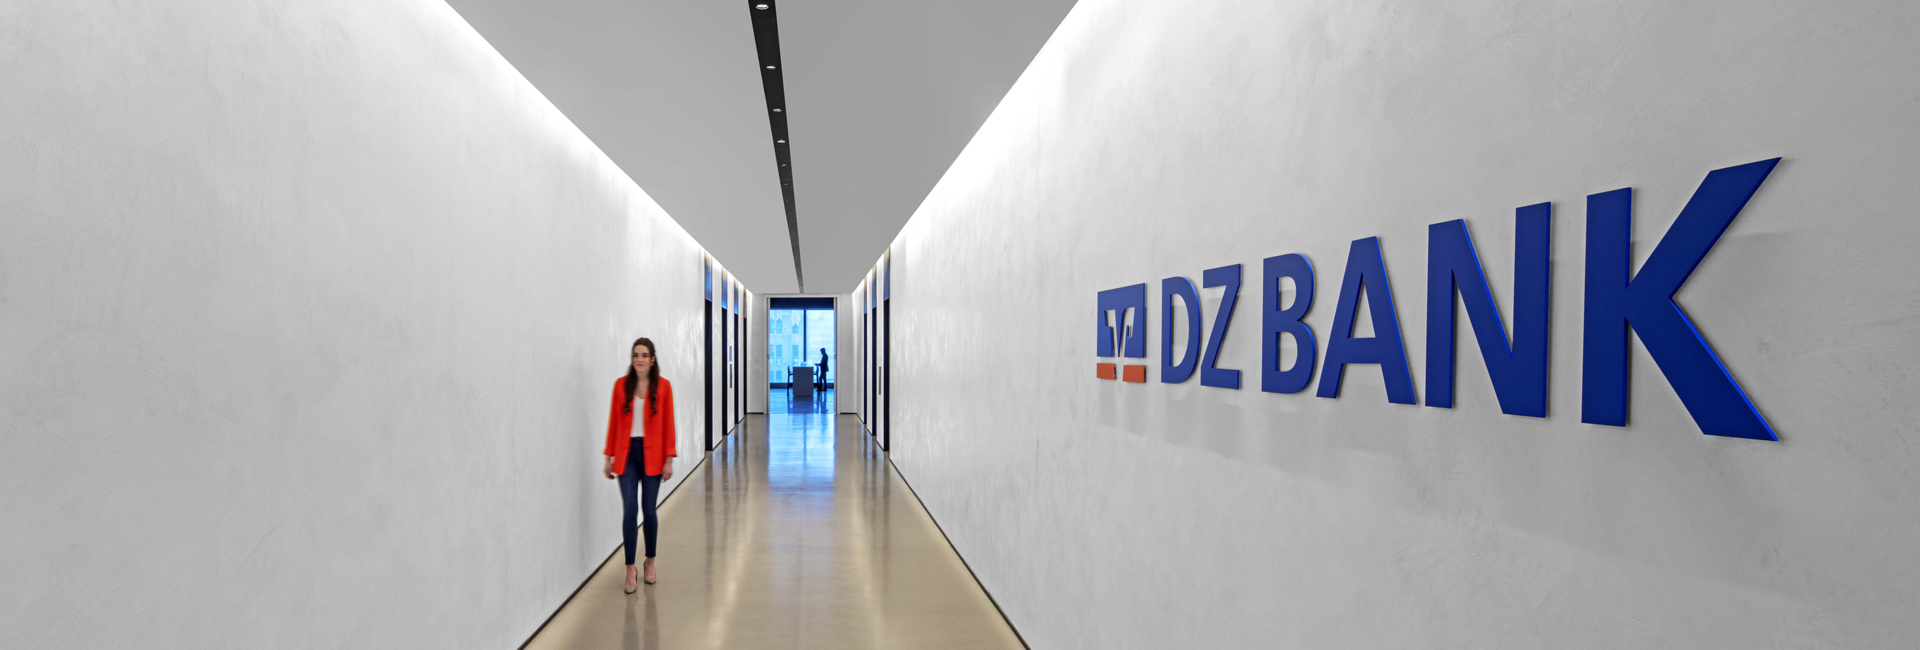 DZ Bank hallway headquarters